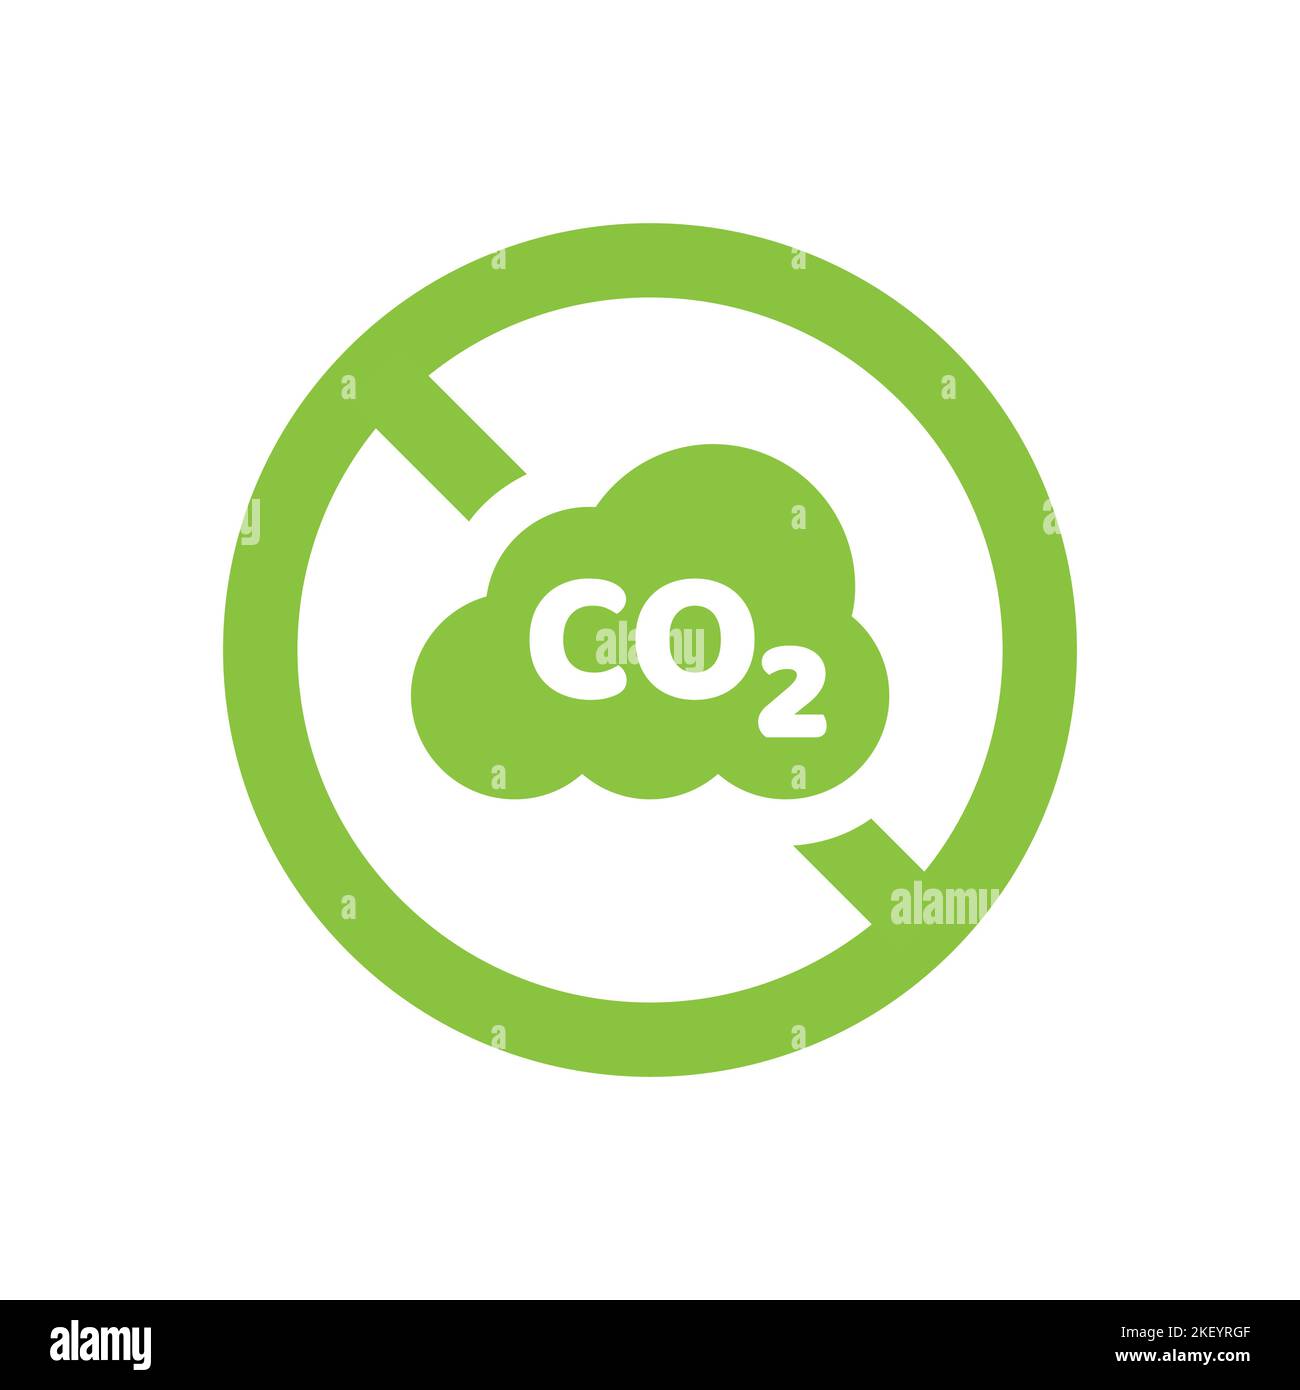 No co2 prohibition vector sign. Zero carbon dioxide emissions, carbon free icon. Stock Vector